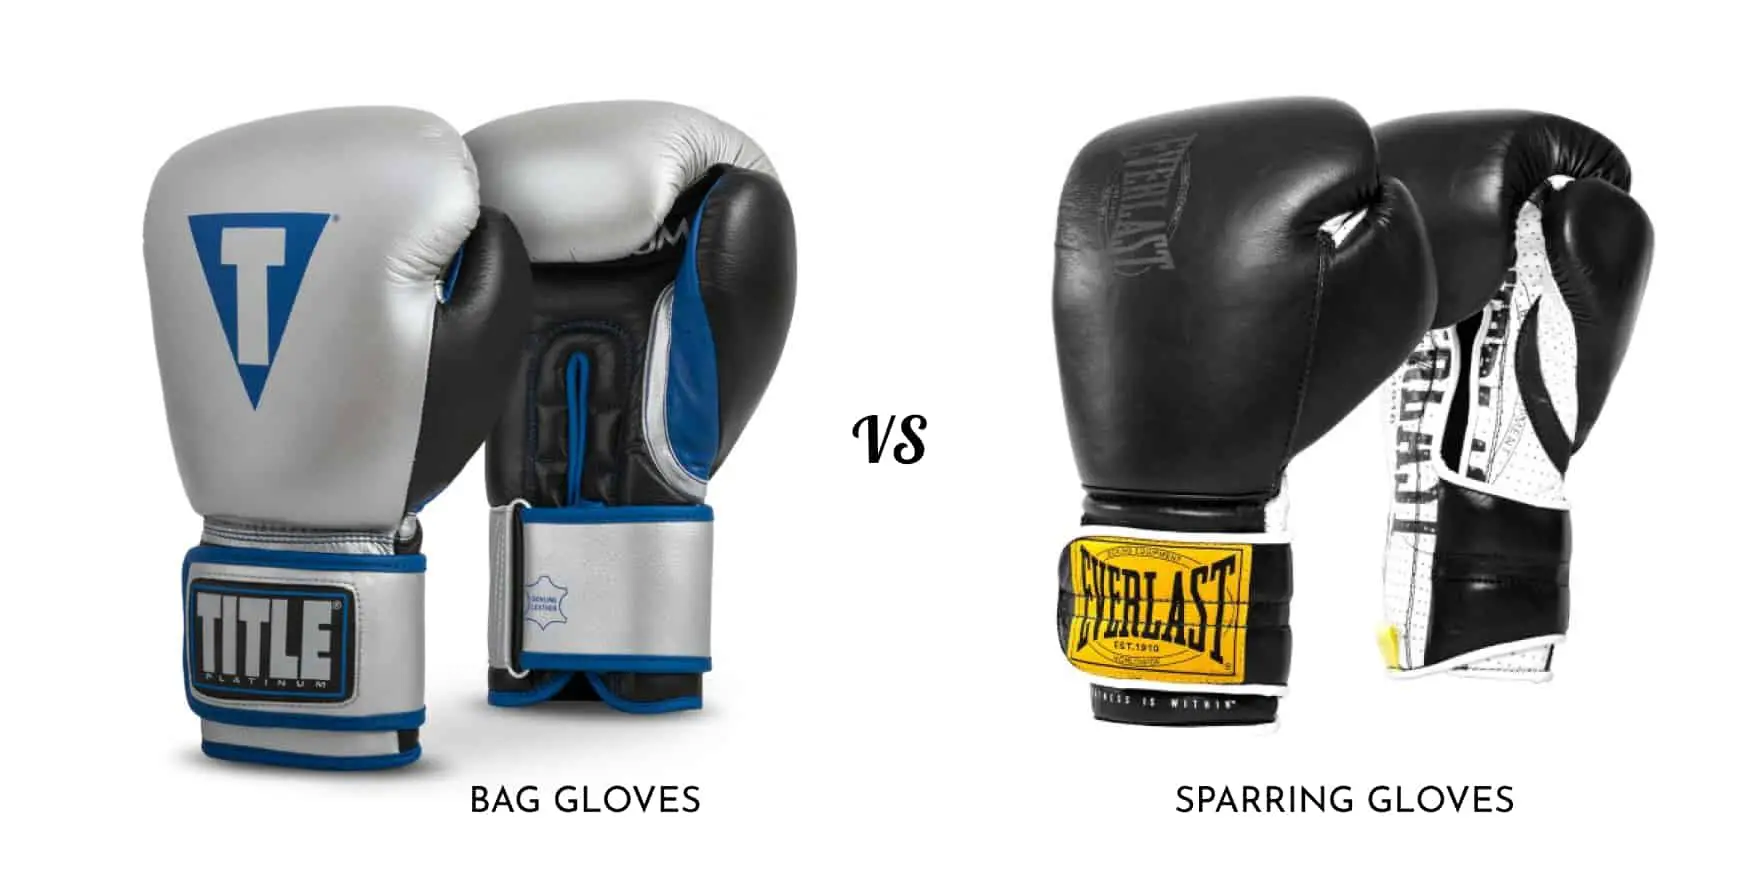 Bag Gloves vs Sparring Gloves